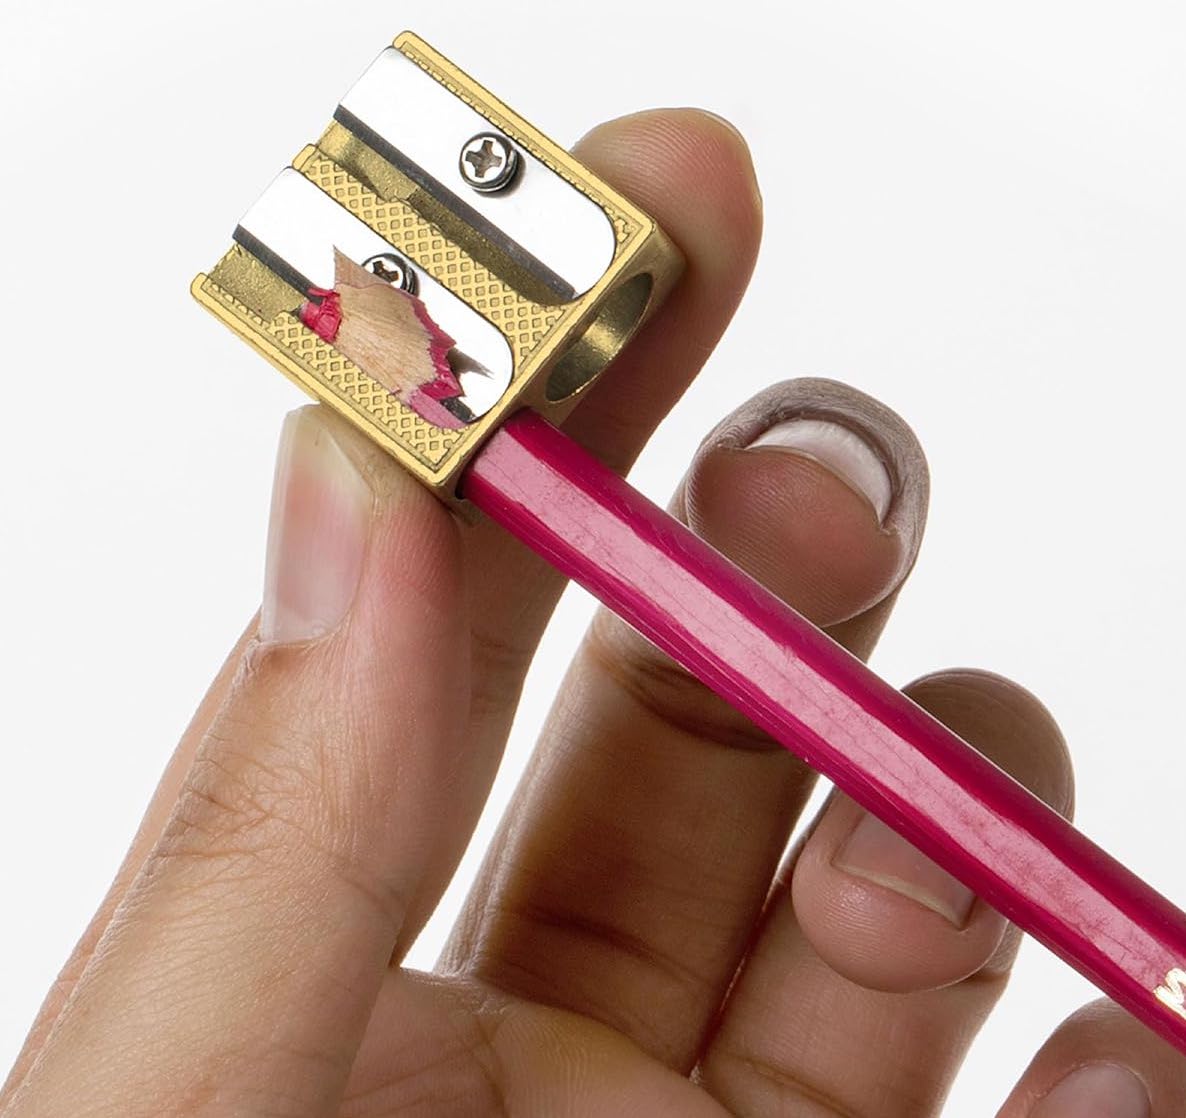 Brass pencil sharpener